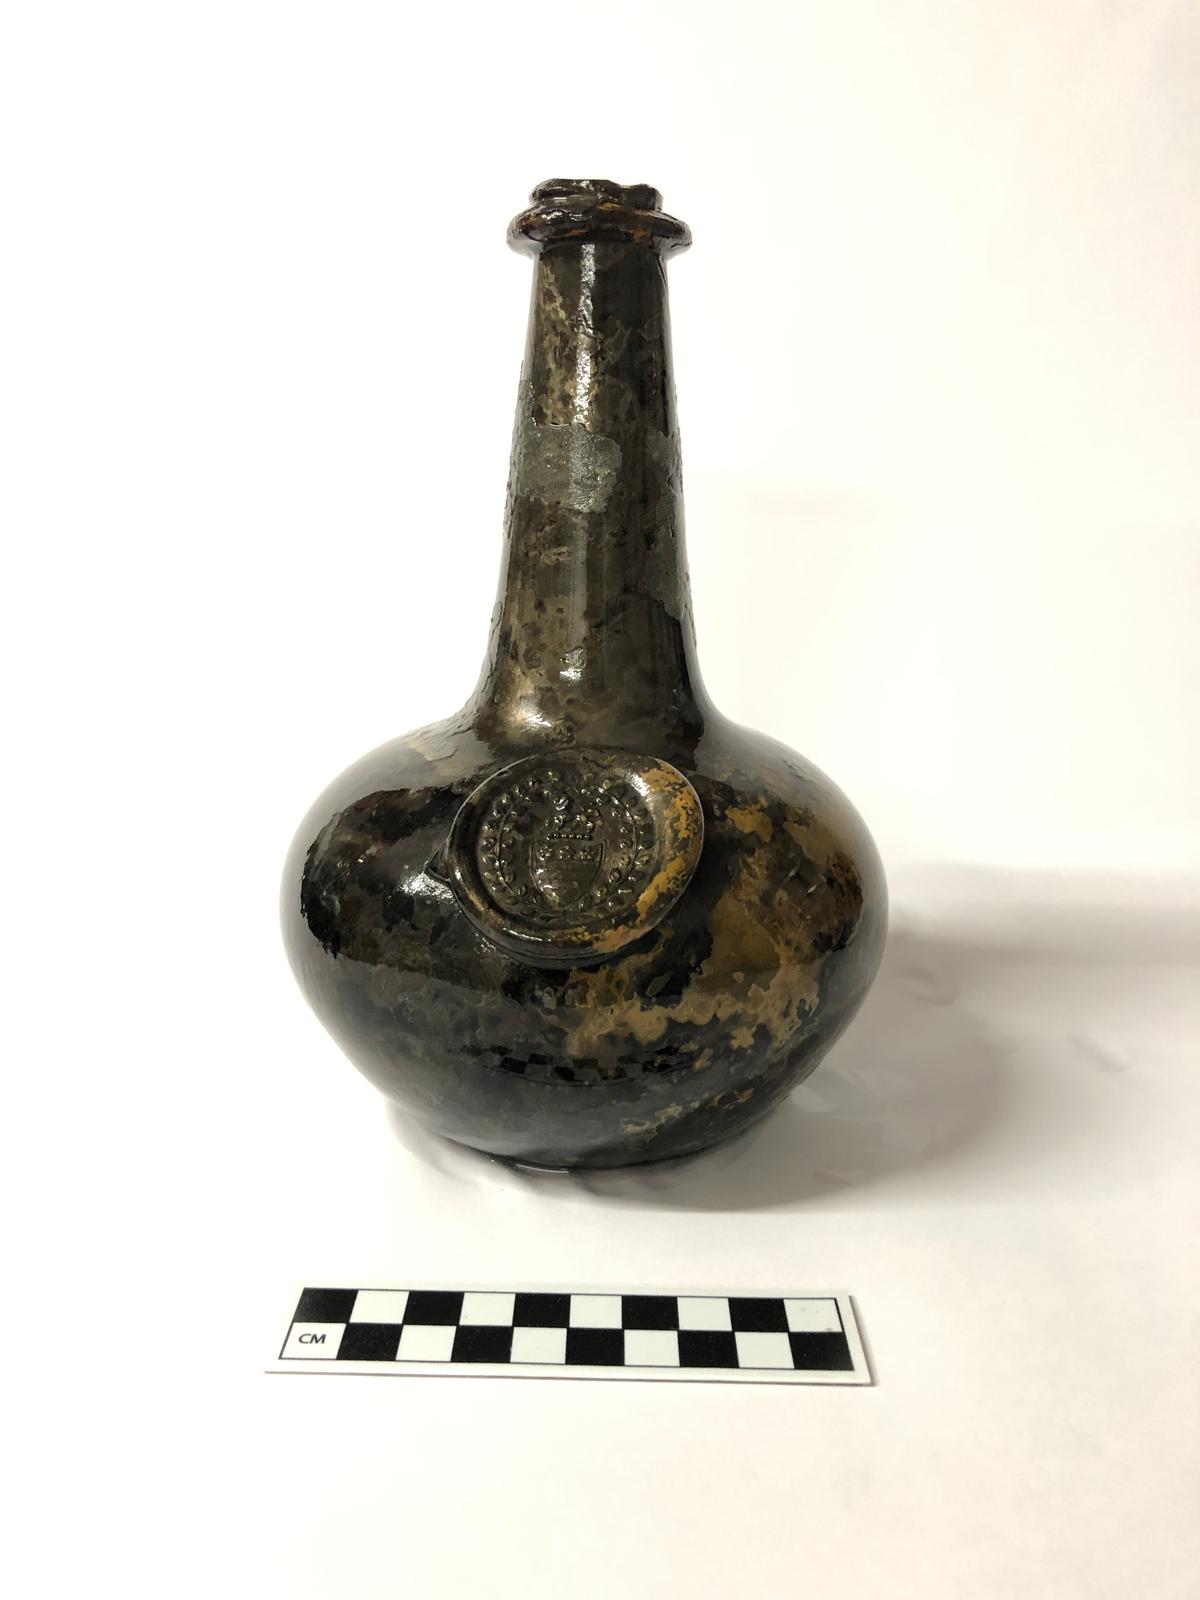 A wine bottle with the Washington family crest. (Courtesy of Norfolk Historic Shipwrecks)